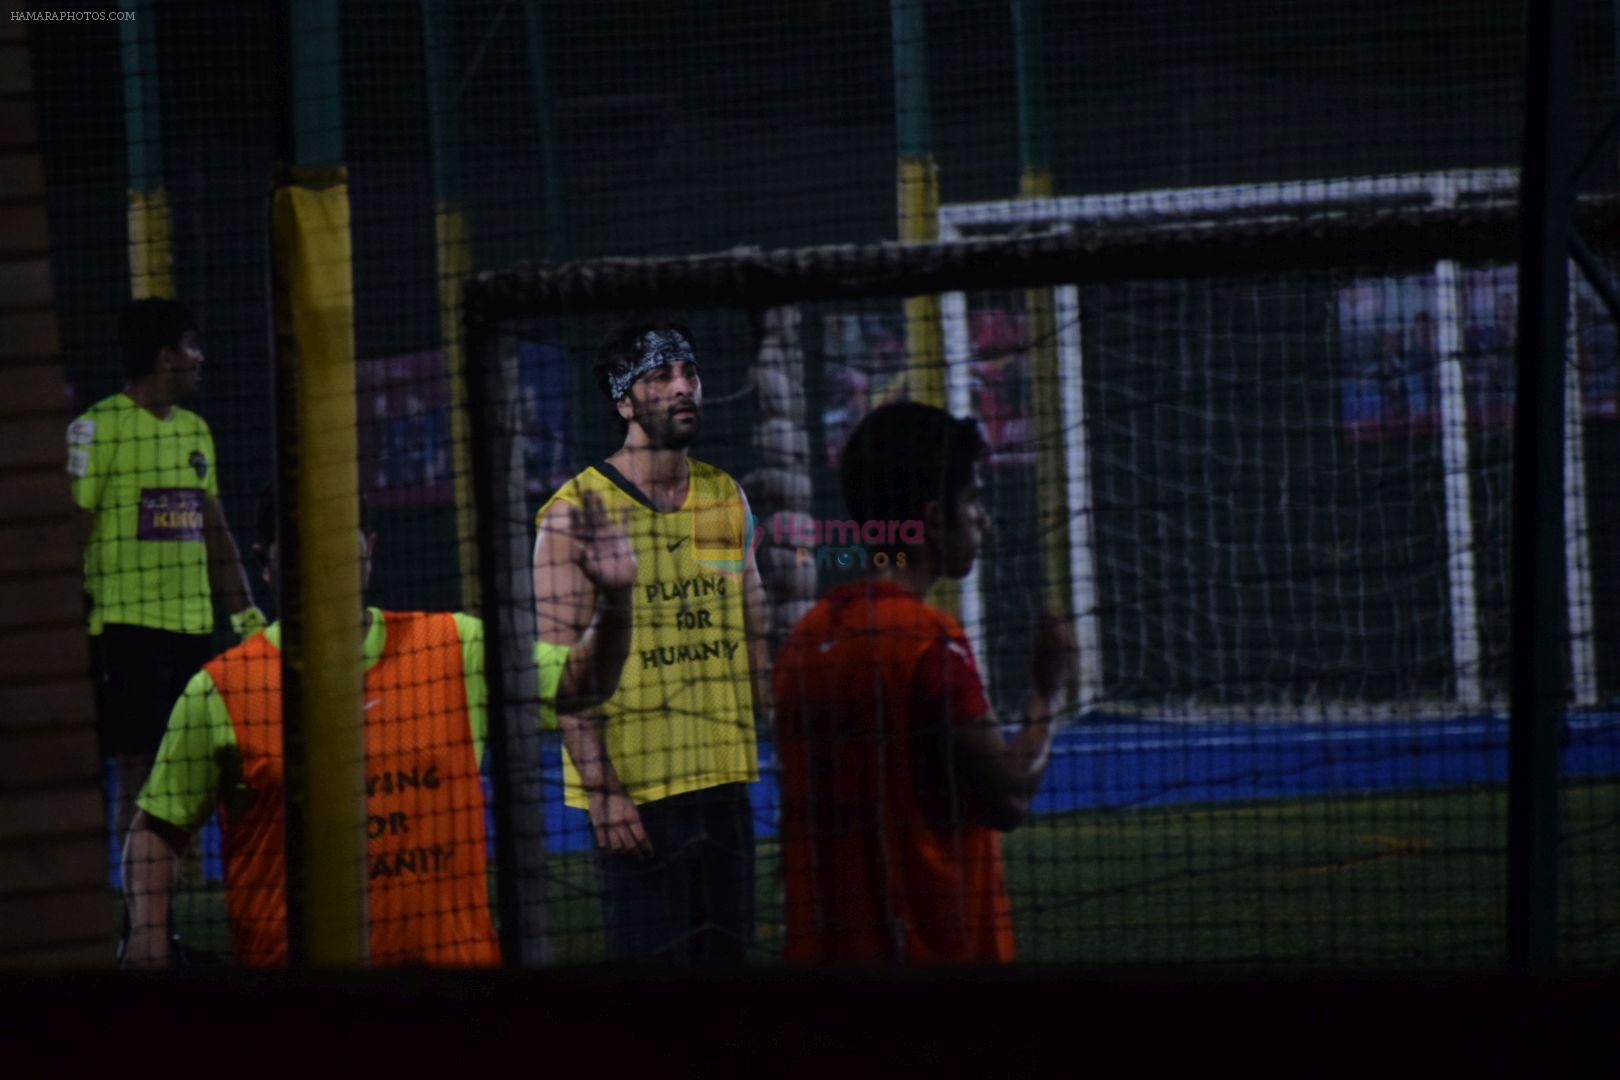 Ranbir Kapoor playing football match at juhu in mumbai on 16th April 2018